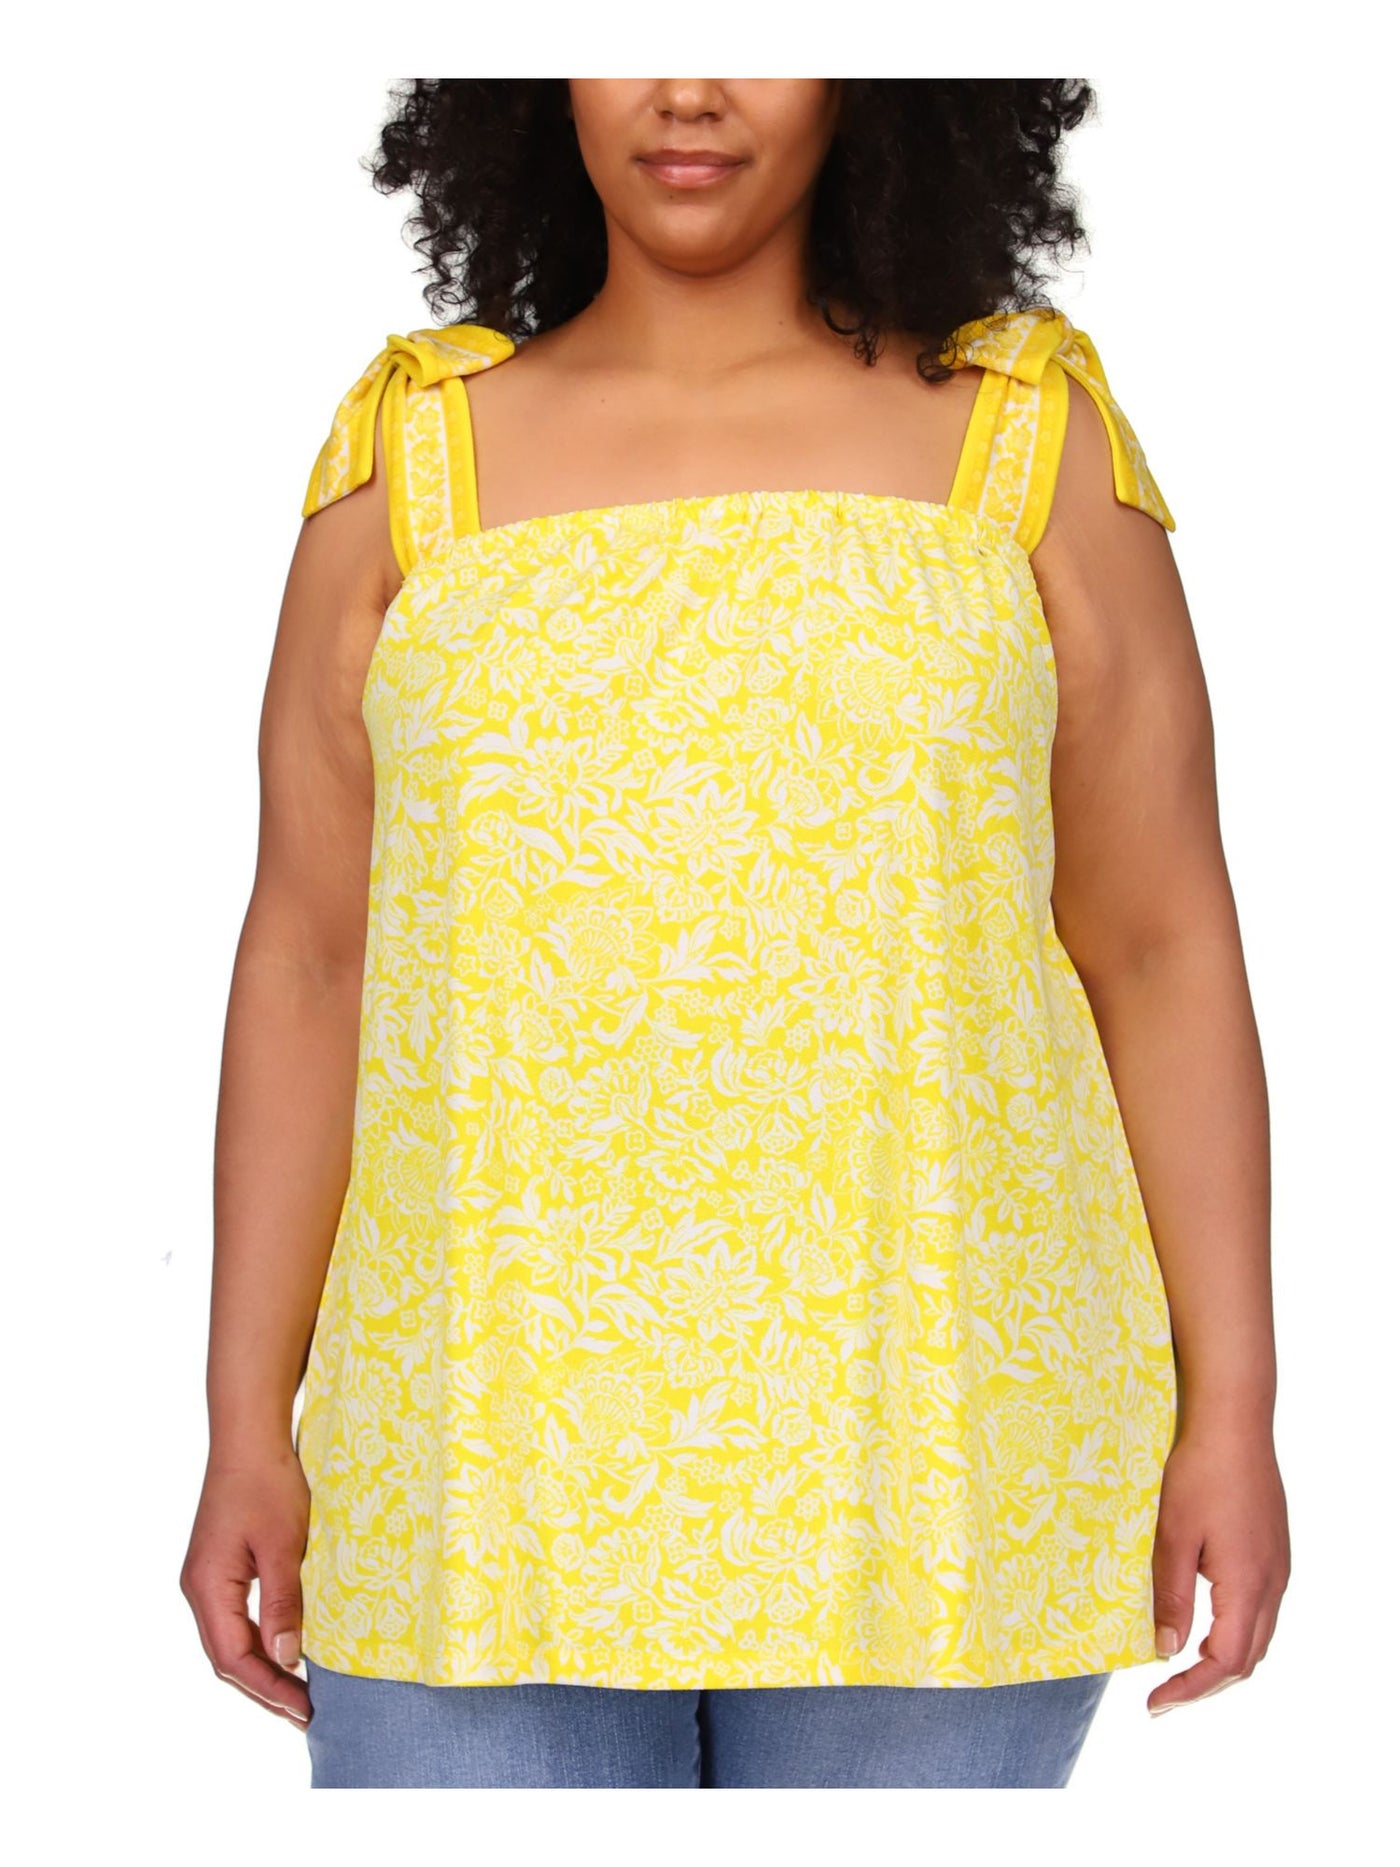 MICHAEL KORS Womens Yellow Printed Sleeveless Square Neck Tank Top Plus 4X